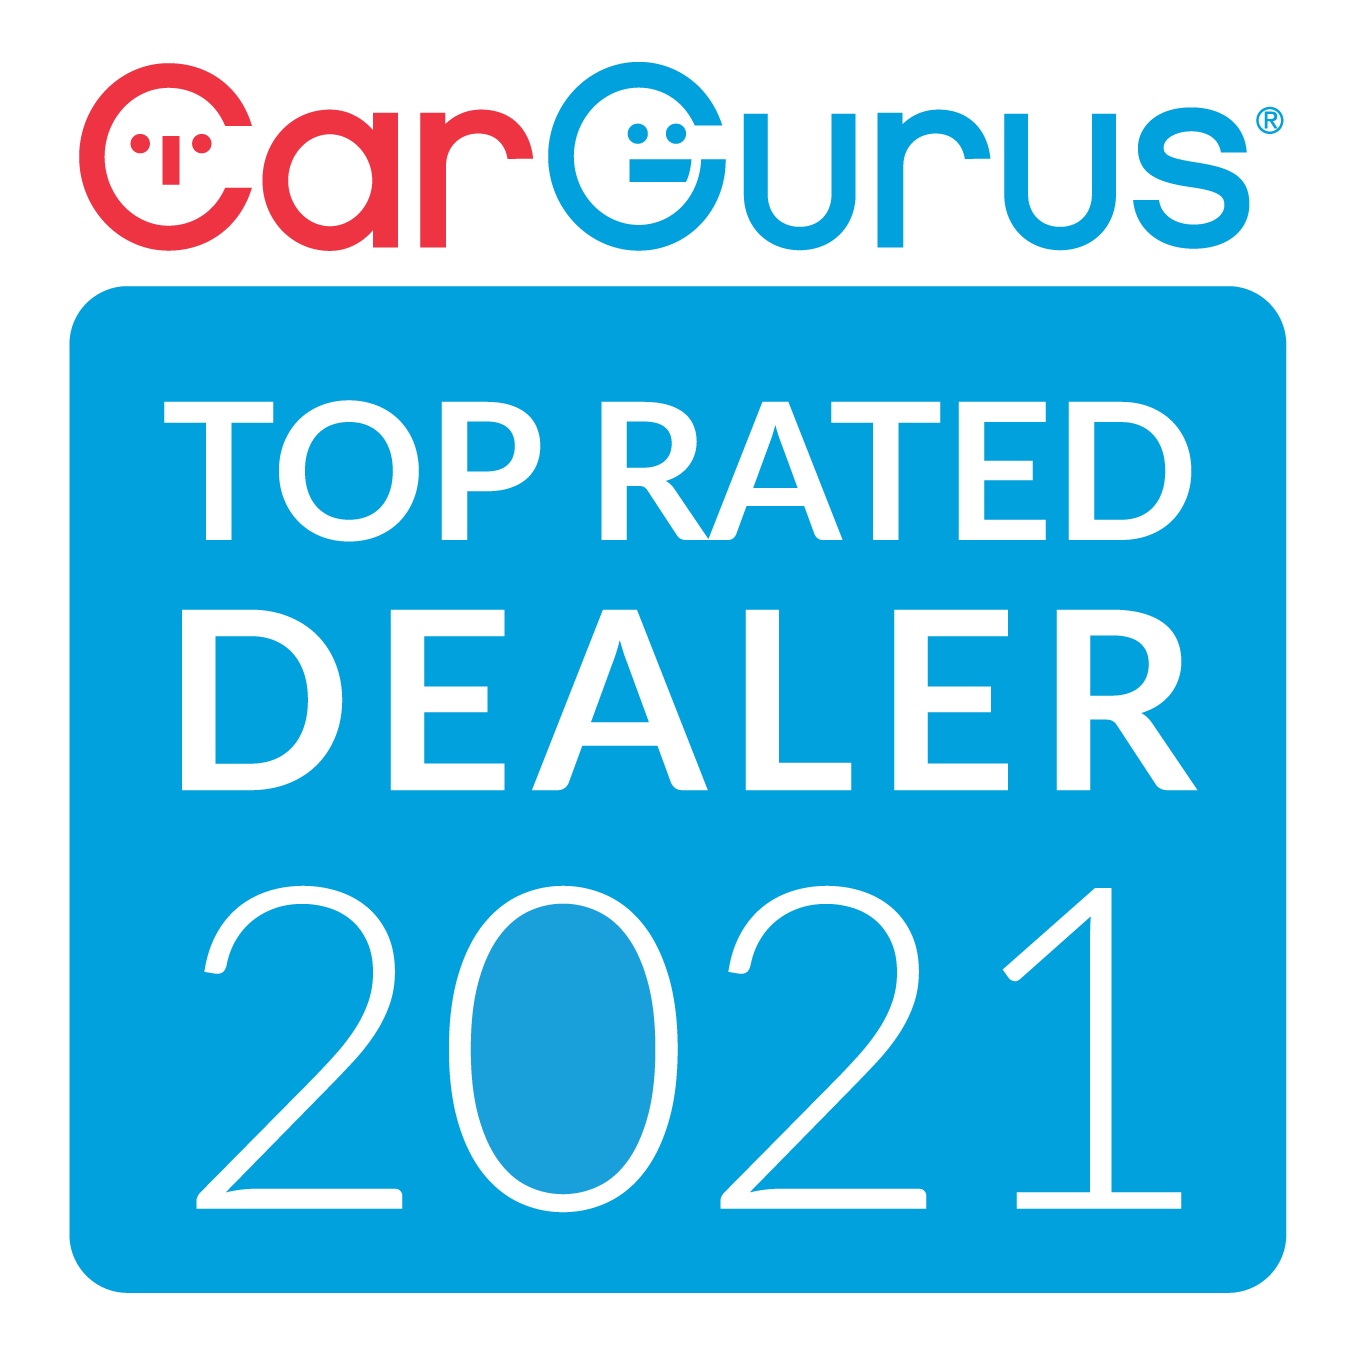 CarGurus Top Rated Dealer 2021